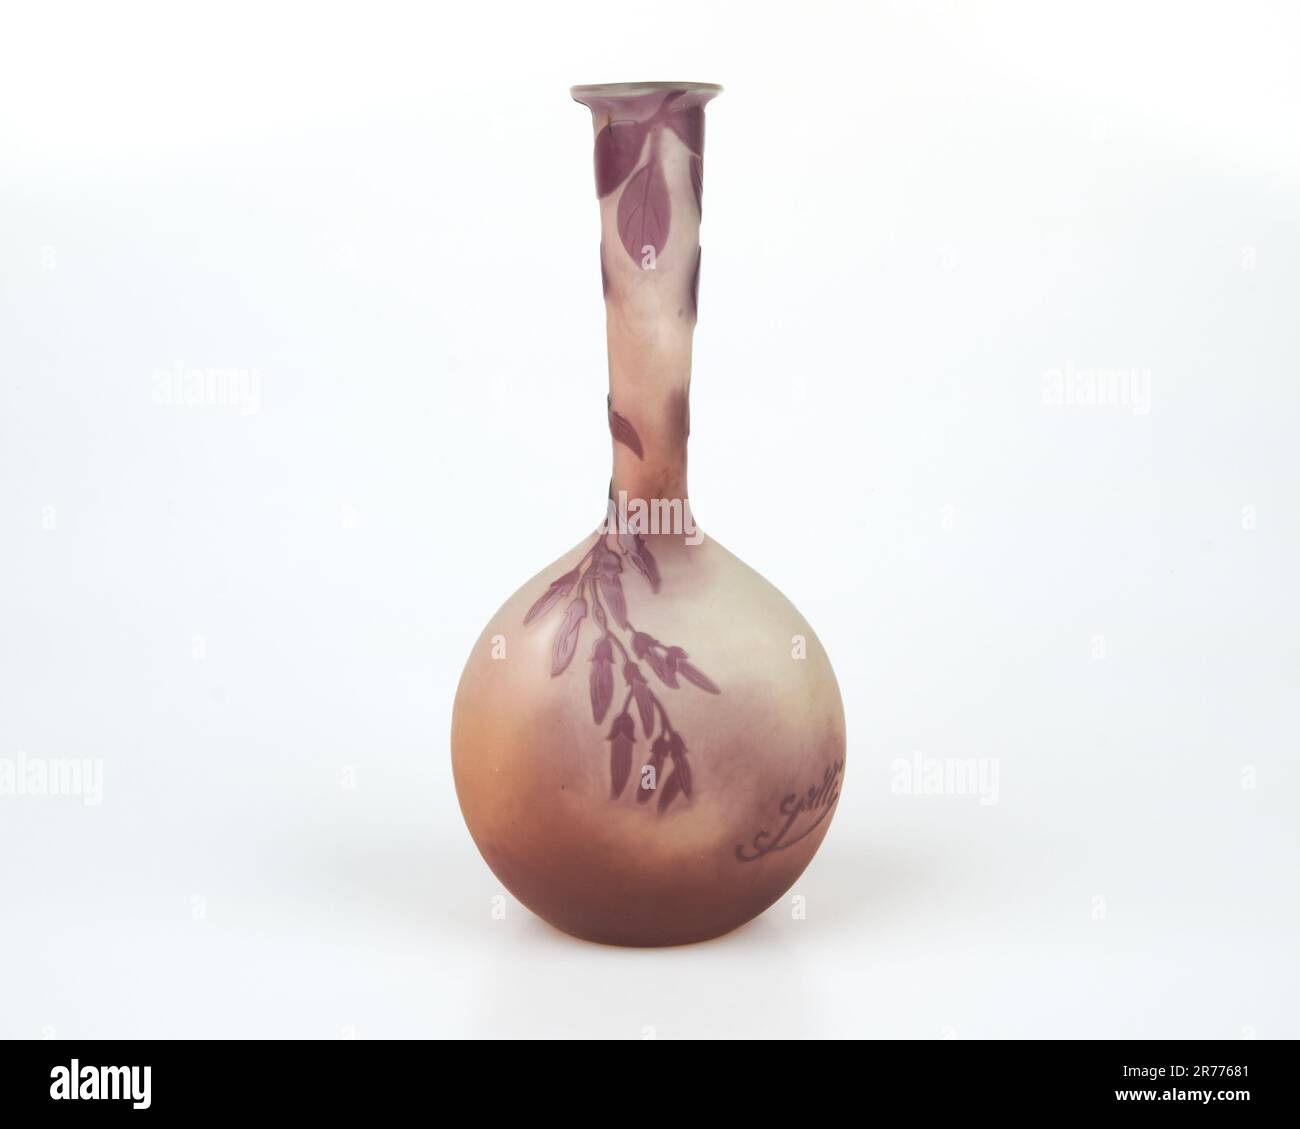 Antique 1900s Emile Galle Art Nouveau wisteria cameo glass vase Stock Photo  - Alamy